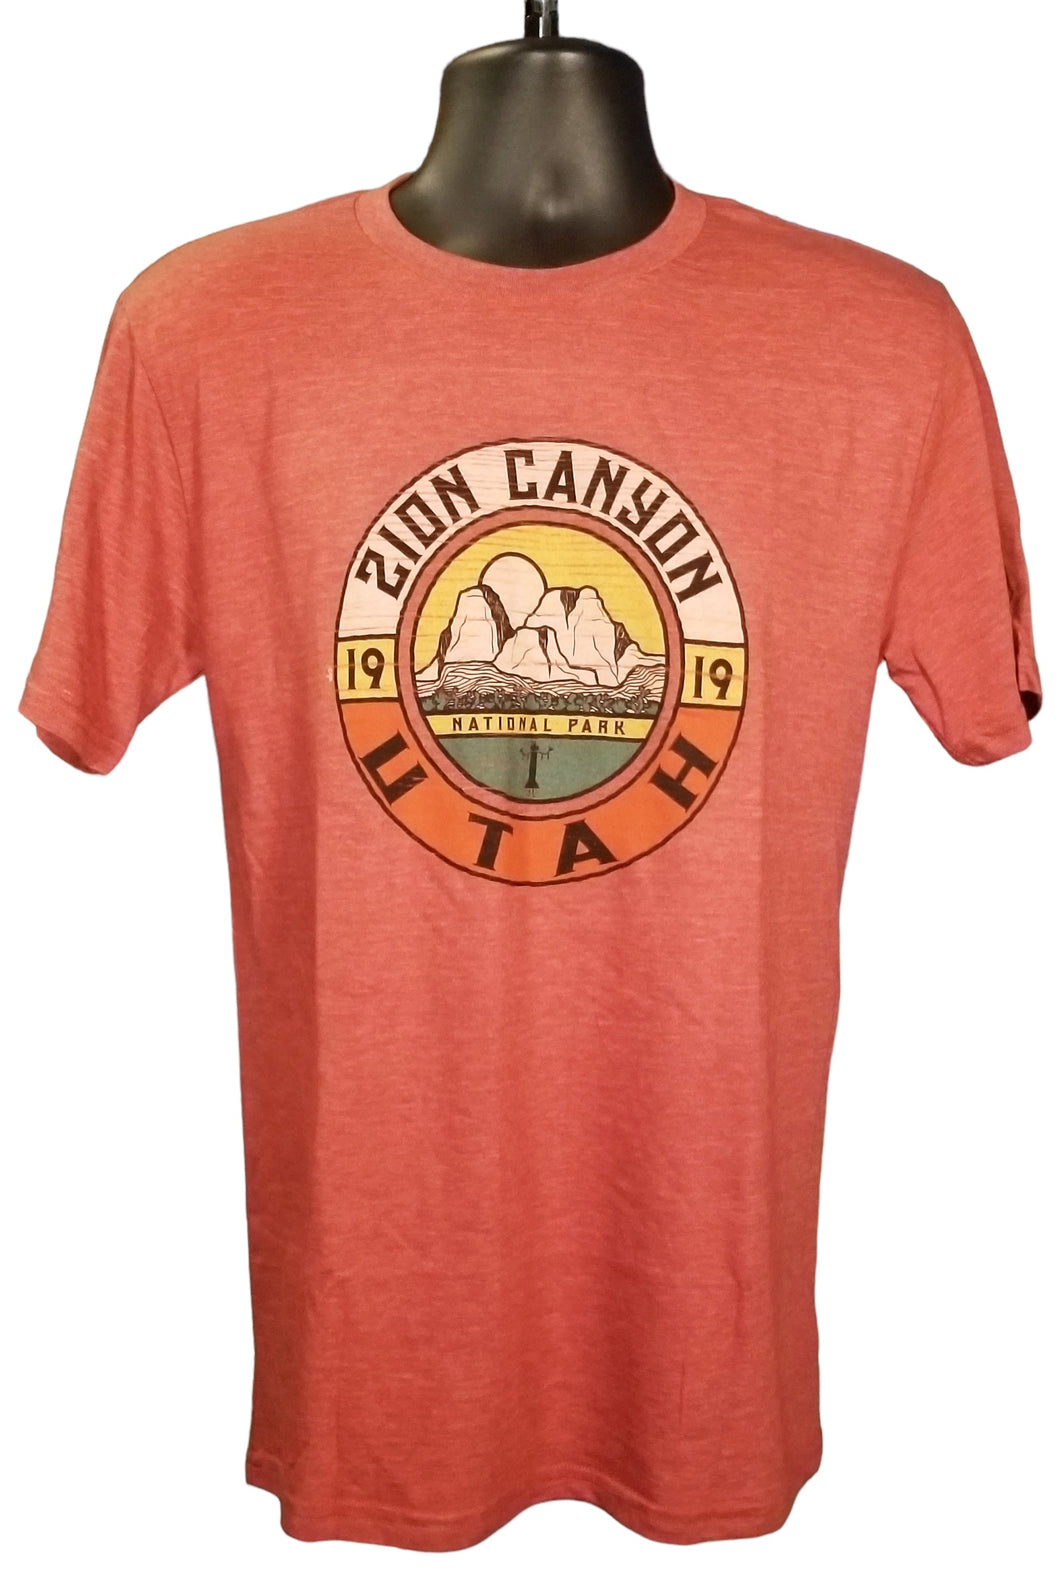 Zion Canyon Bromance T-Shirt